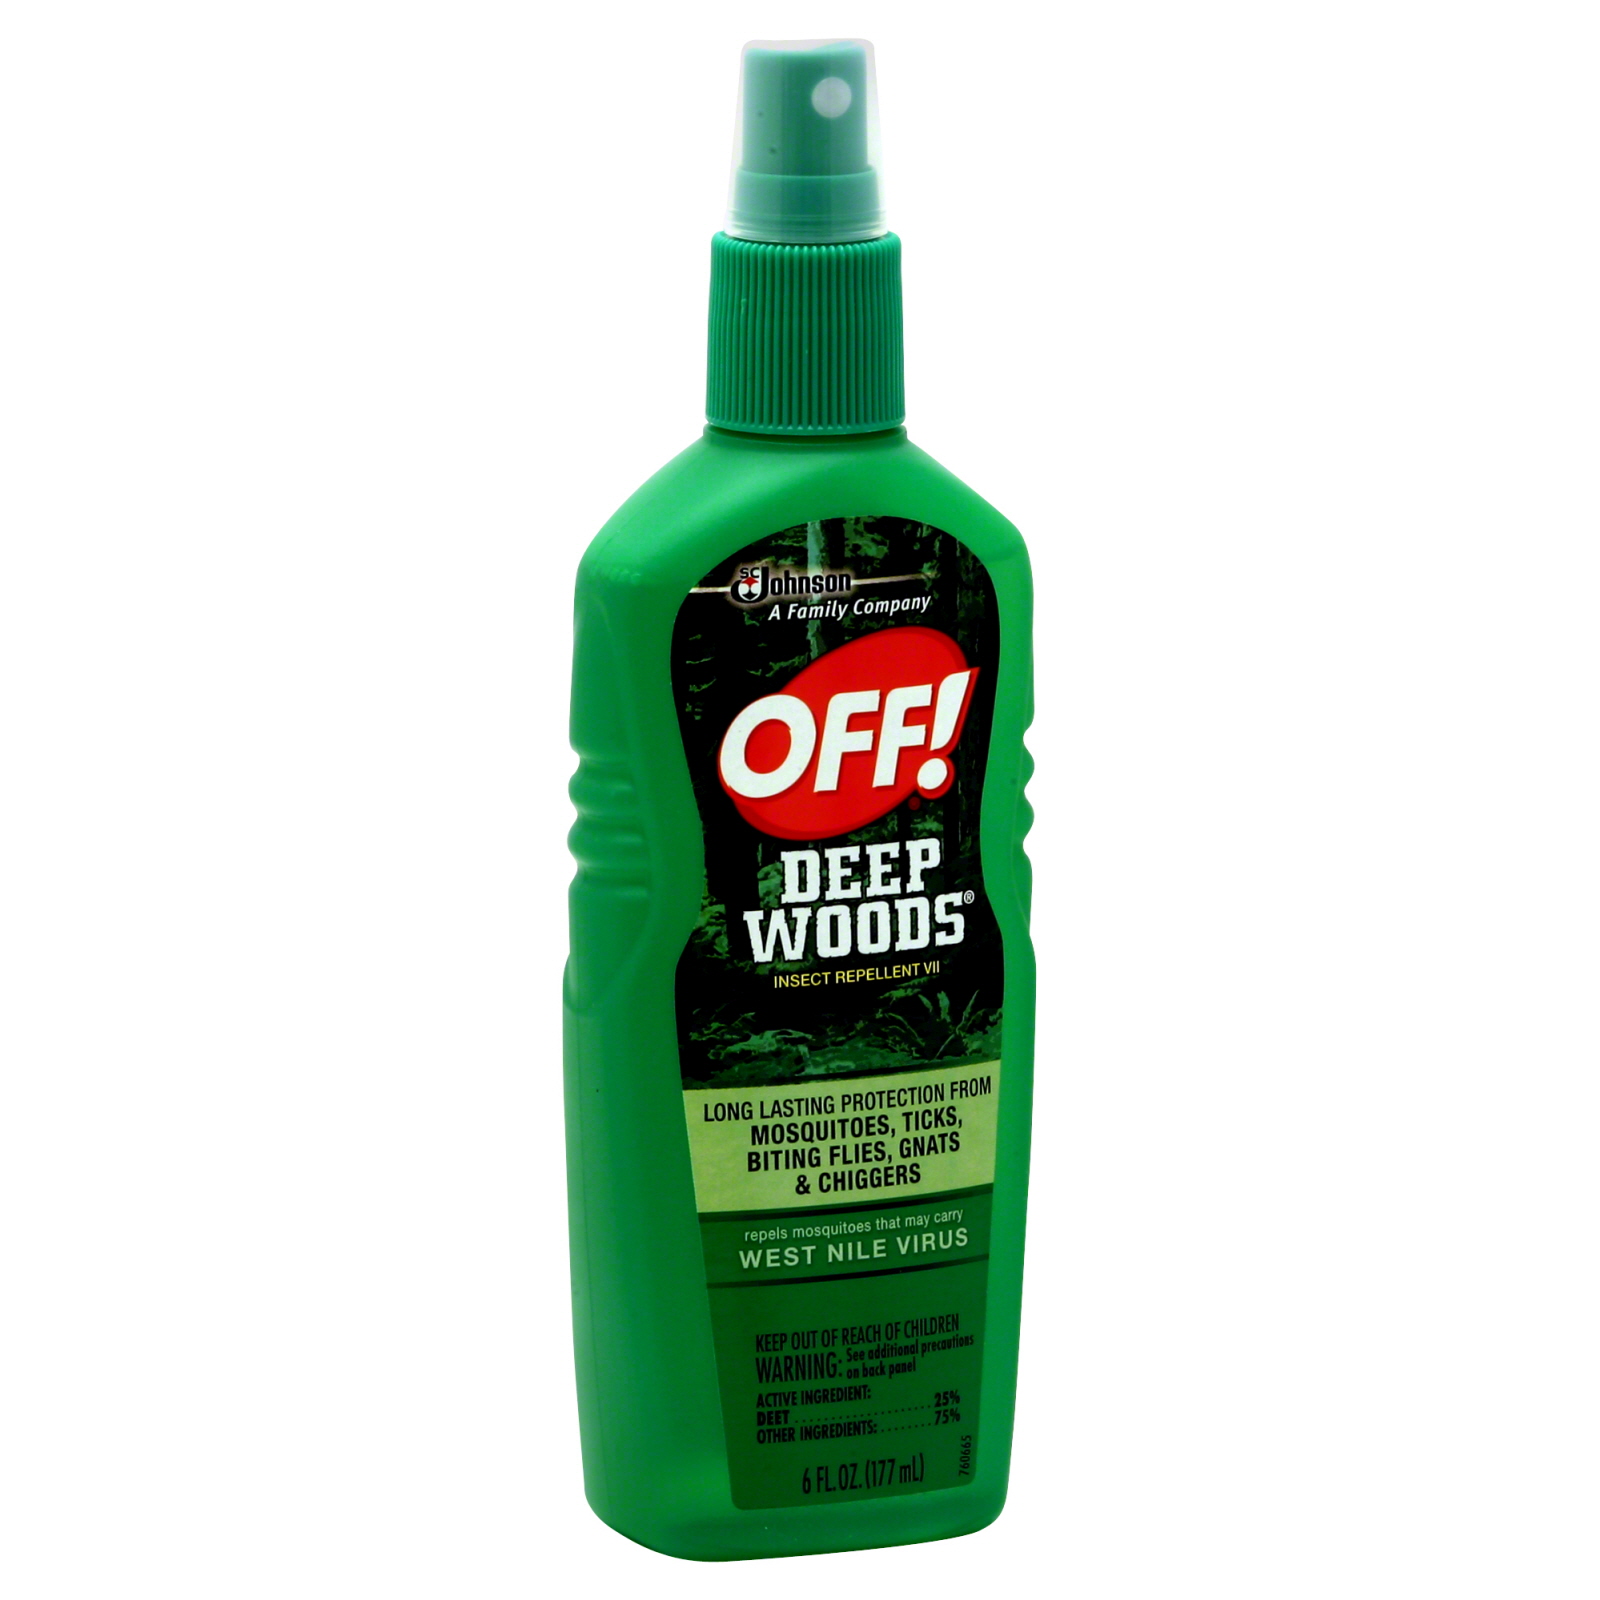 Off! Deep Woods Insect Repellent VII, 6 fl oz (177 ml)